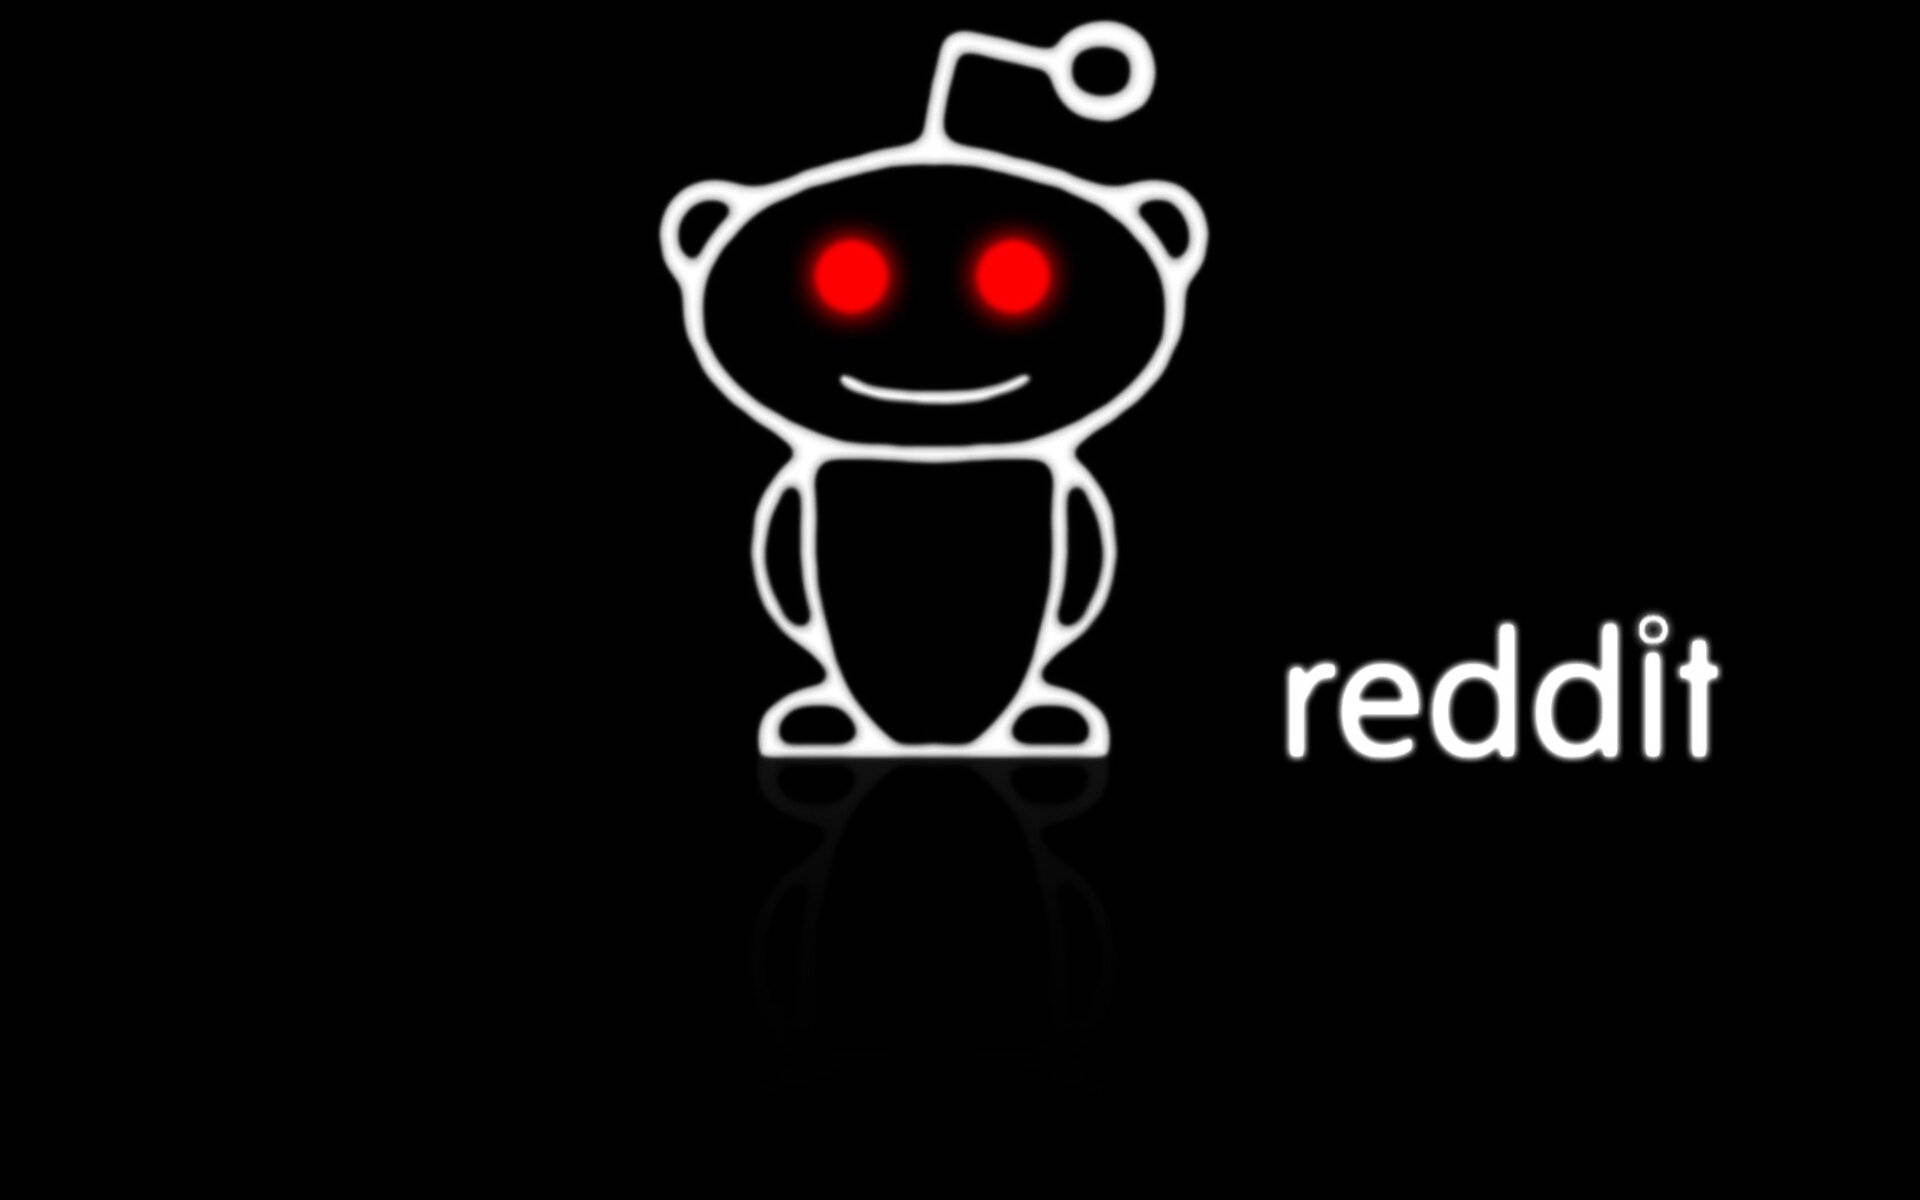 Simple Black Reddit Alien Logo Background